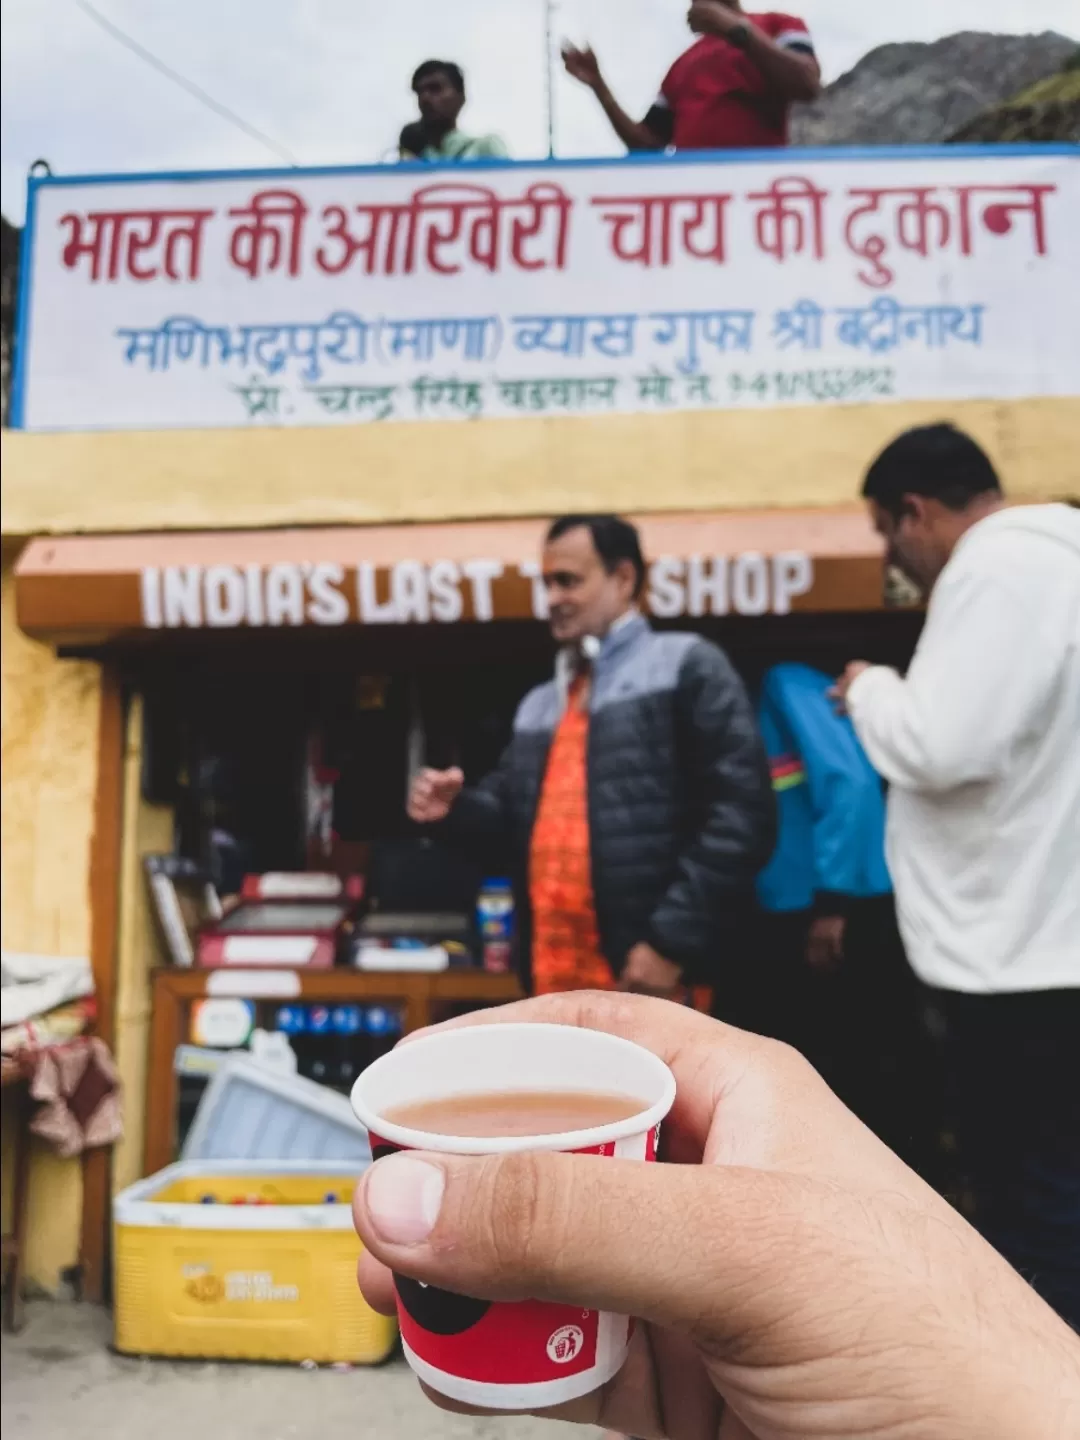 Photo of India's Last Tea Shop By Jagrut Bhatt